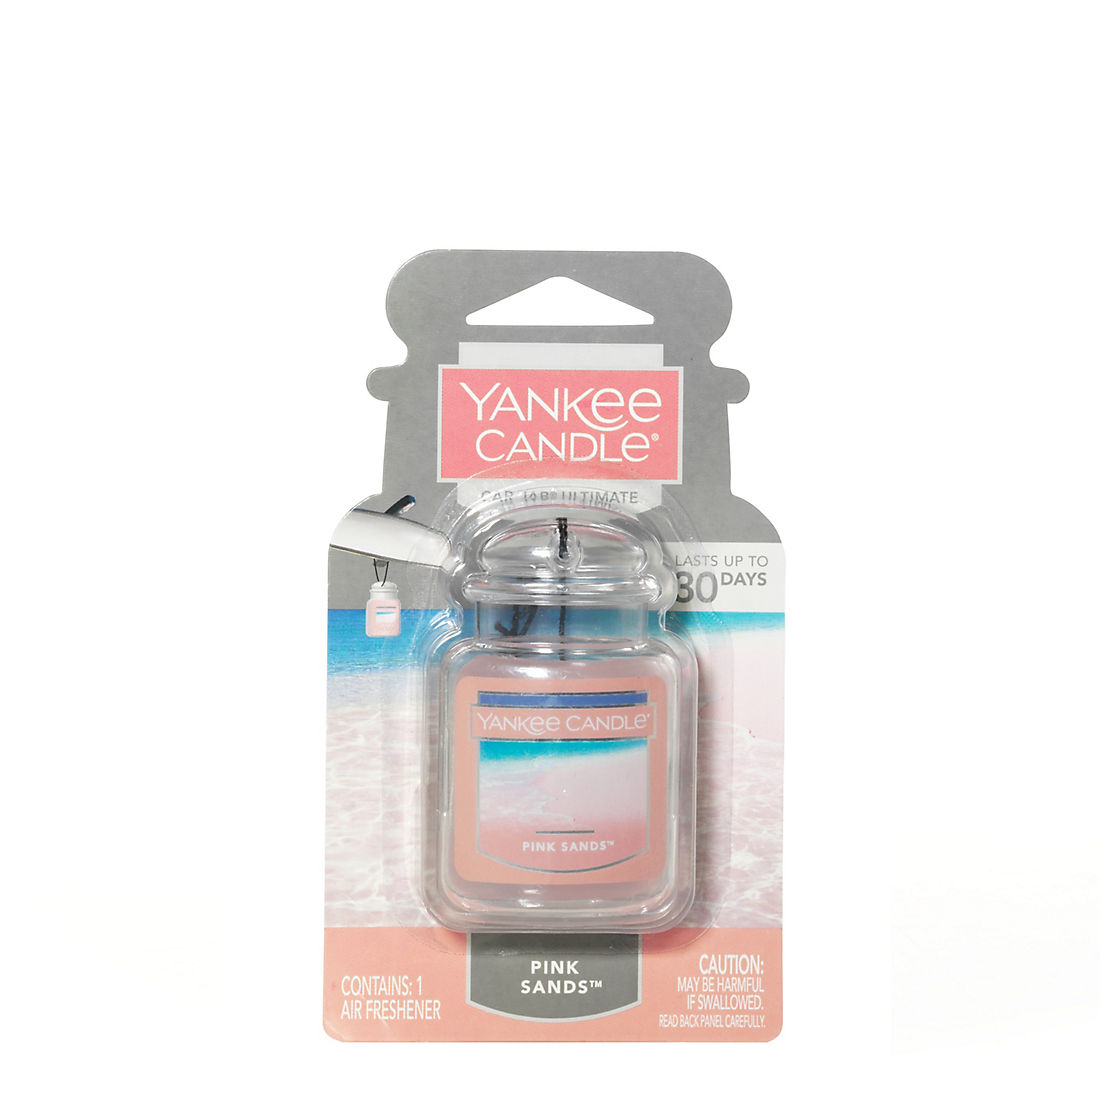 Yankee Candle Car Jar Ultimate - Pink Sands